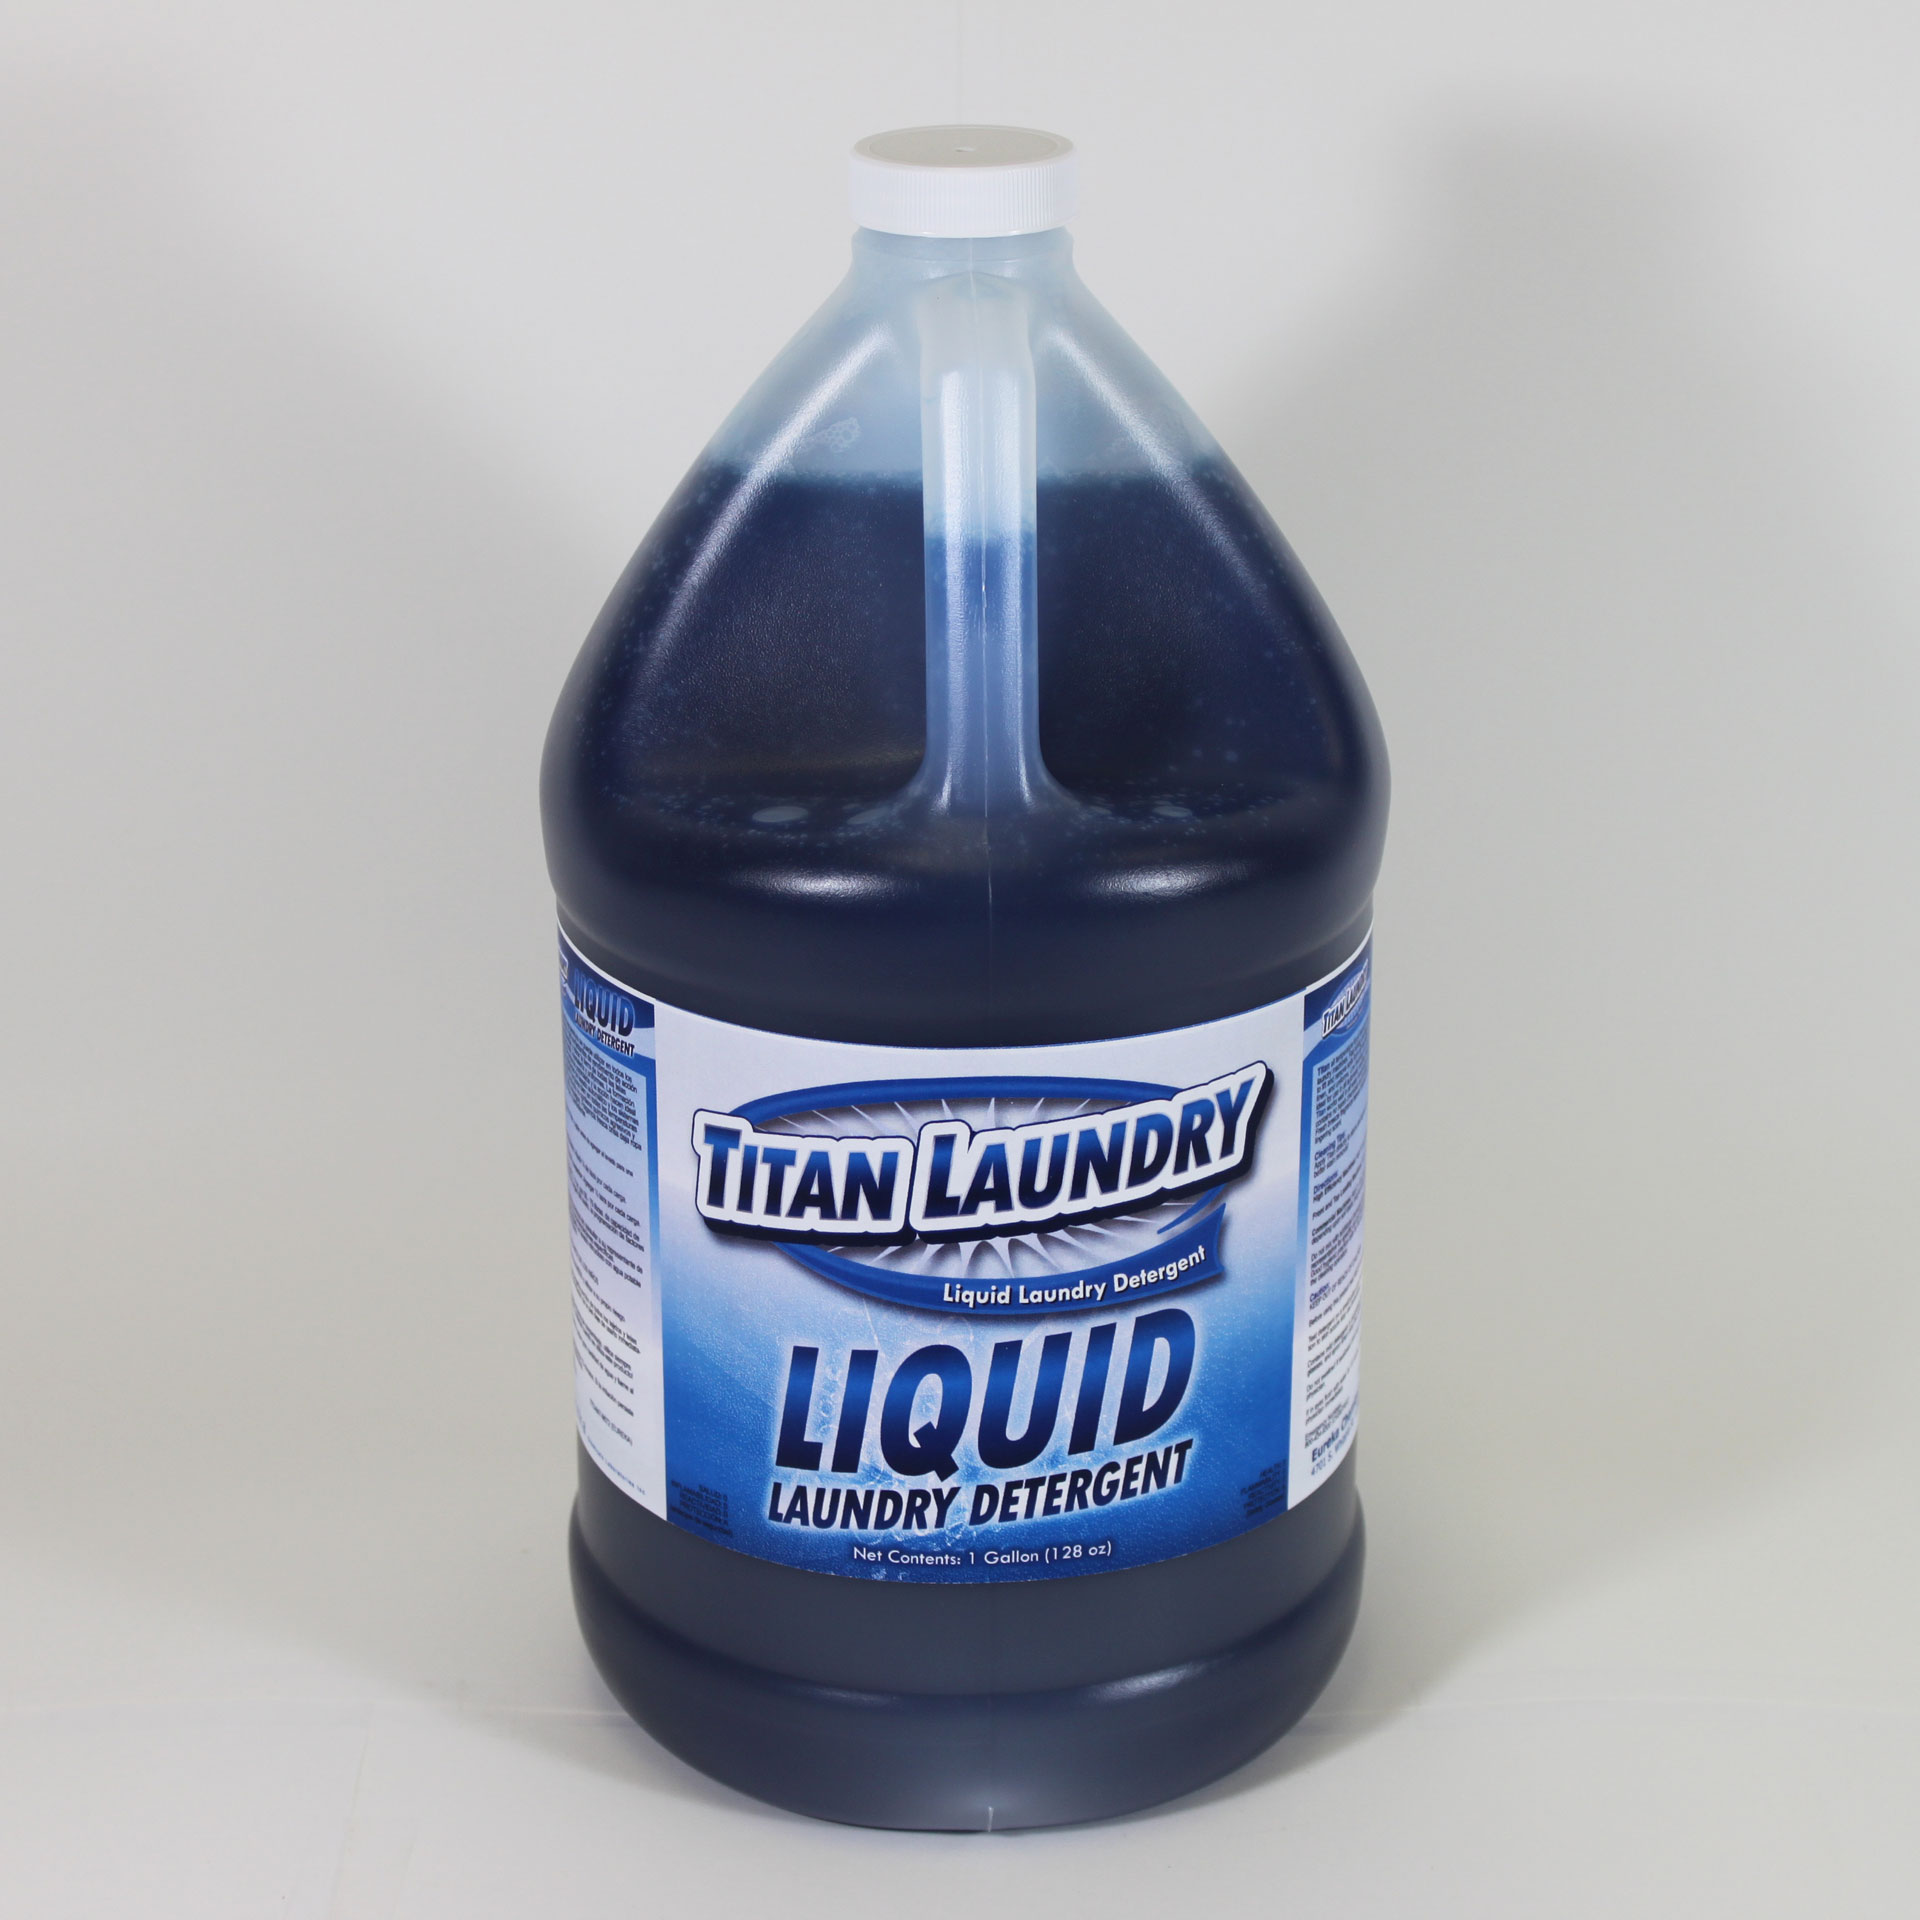 Bottle of Titan Laundry detergent.